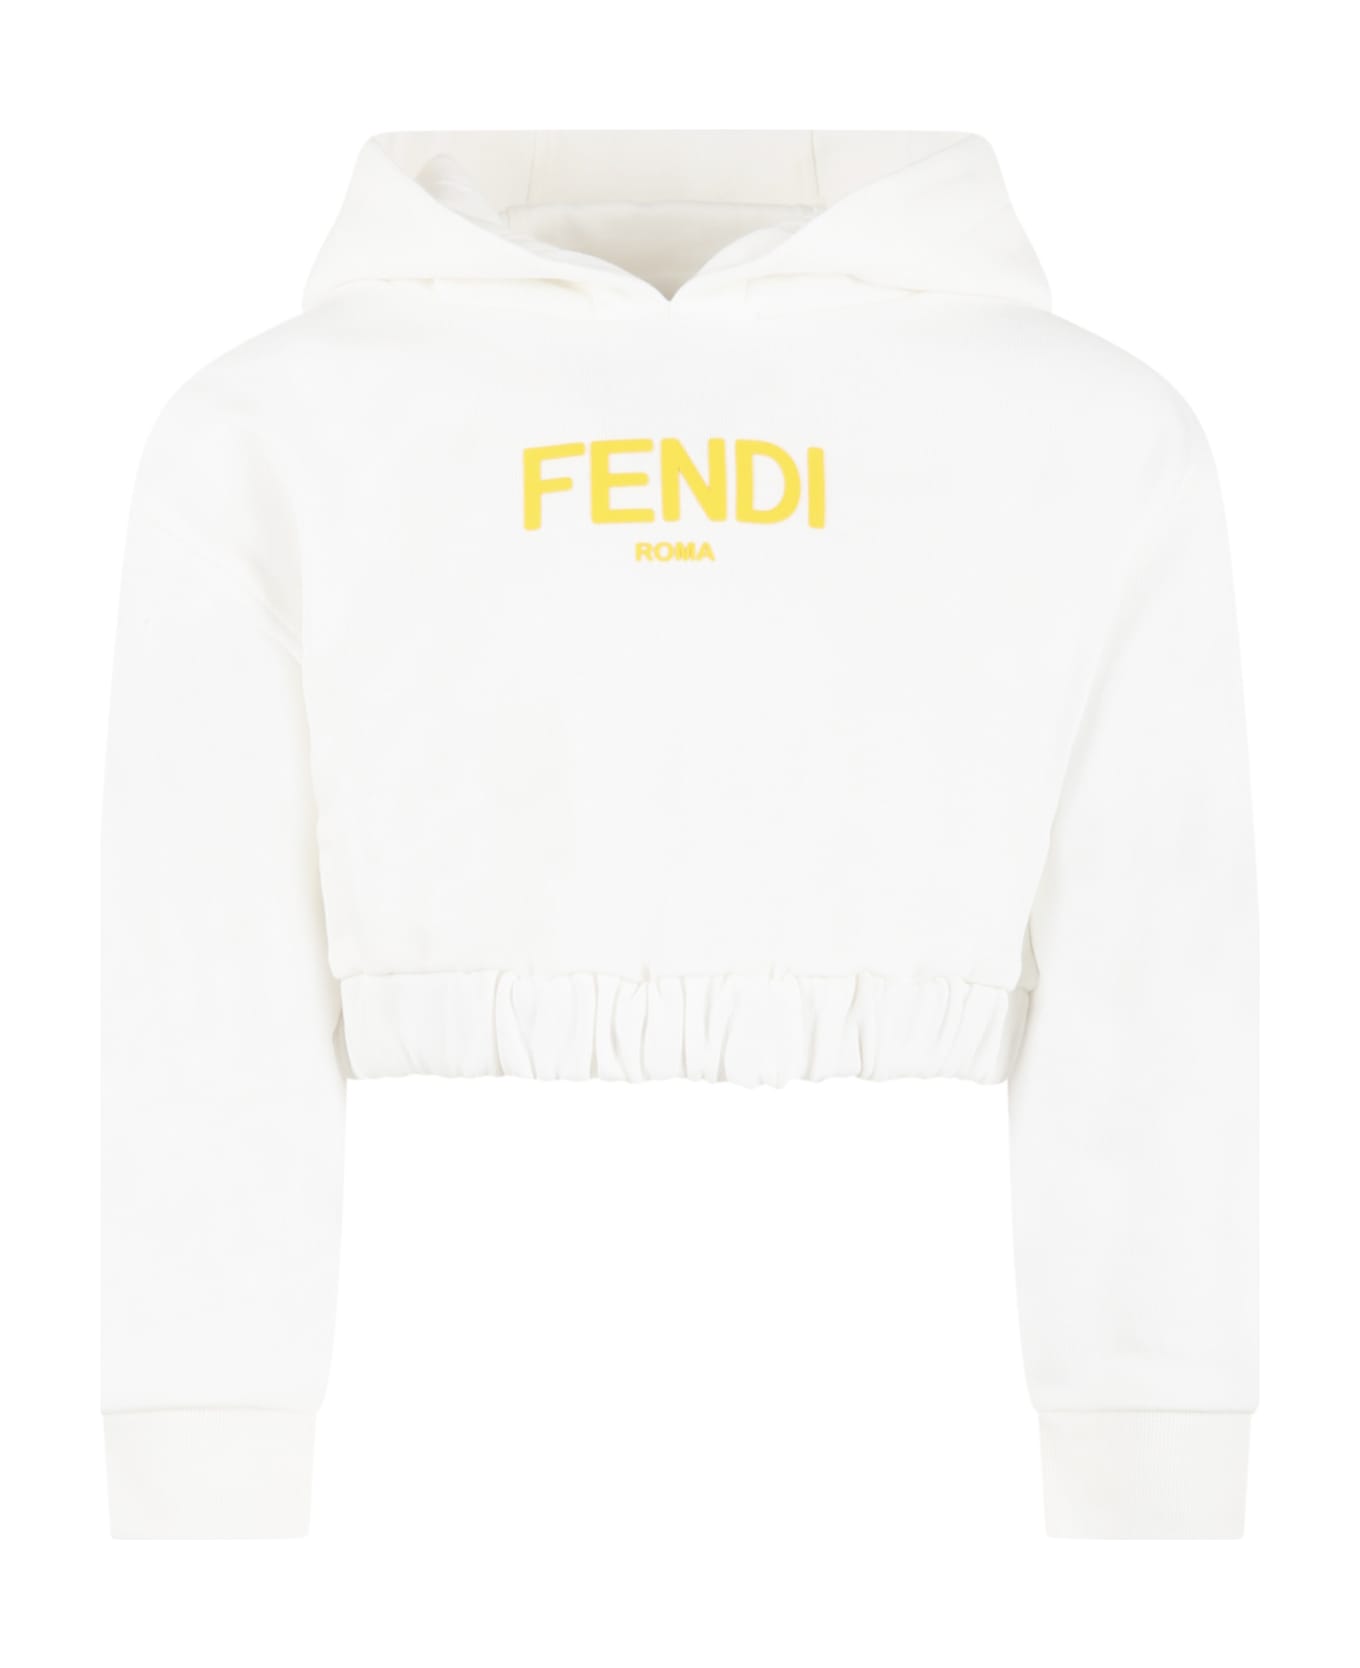 Fendi White Sweatshirt For Girl With Yellow Logo - White